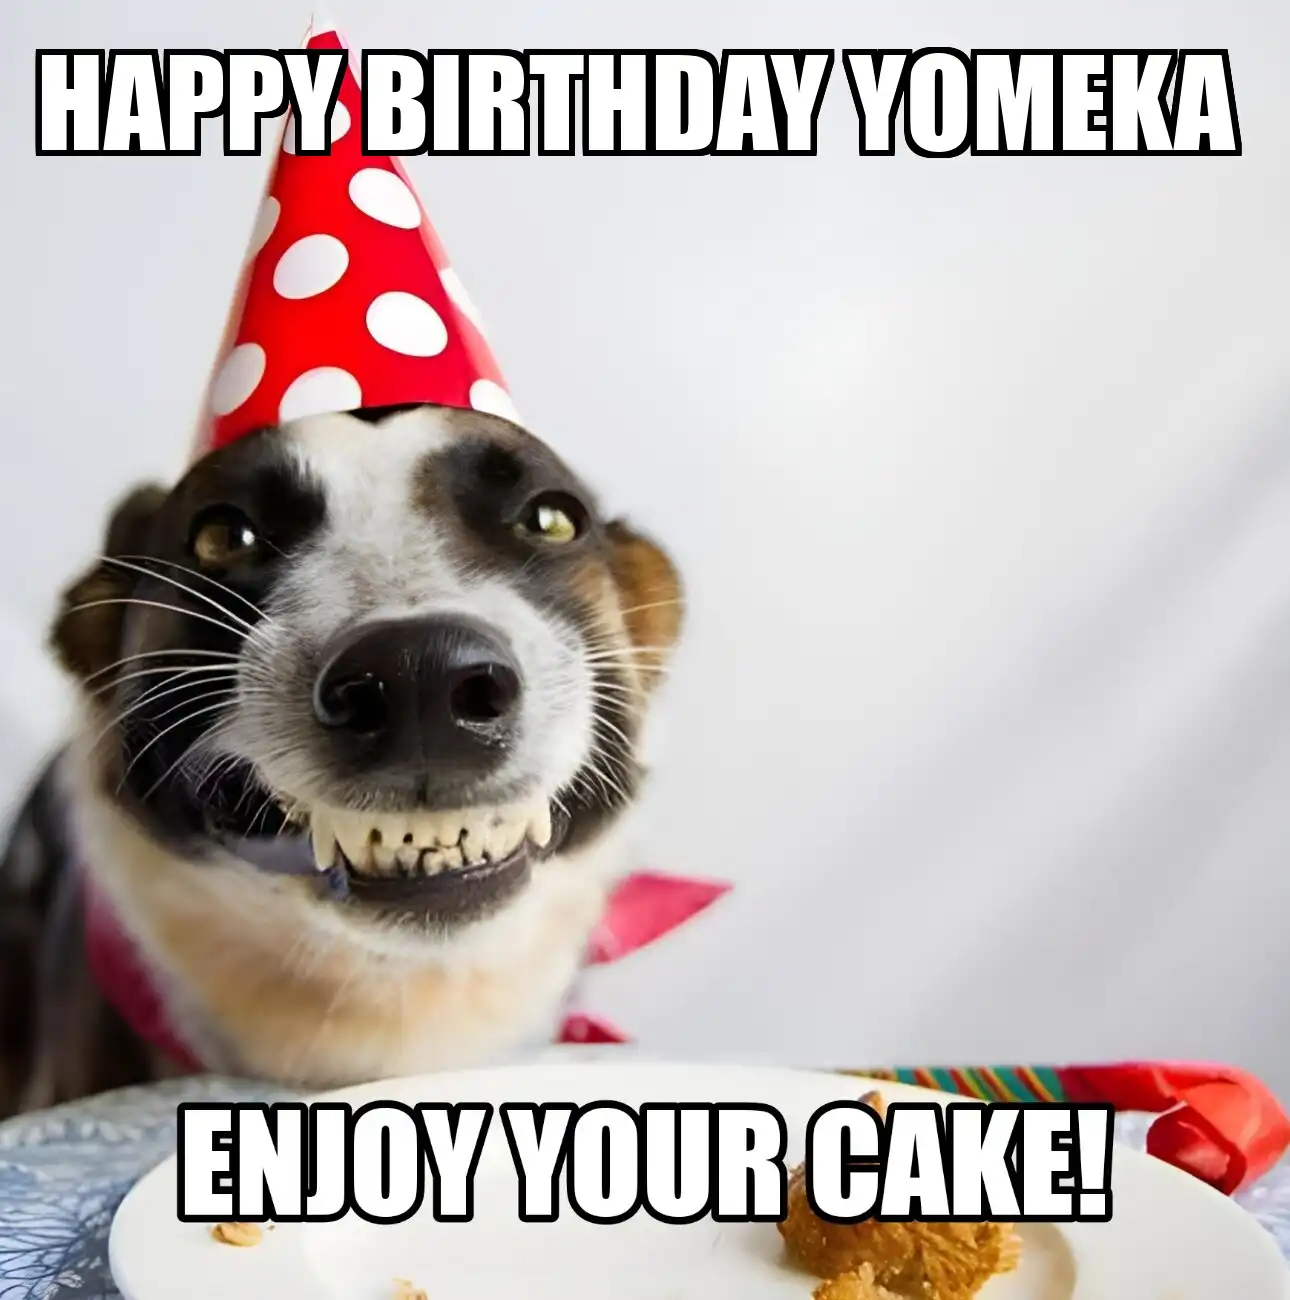 Happy Birthday Yomeka Enjoy Your Cake Dog Meme